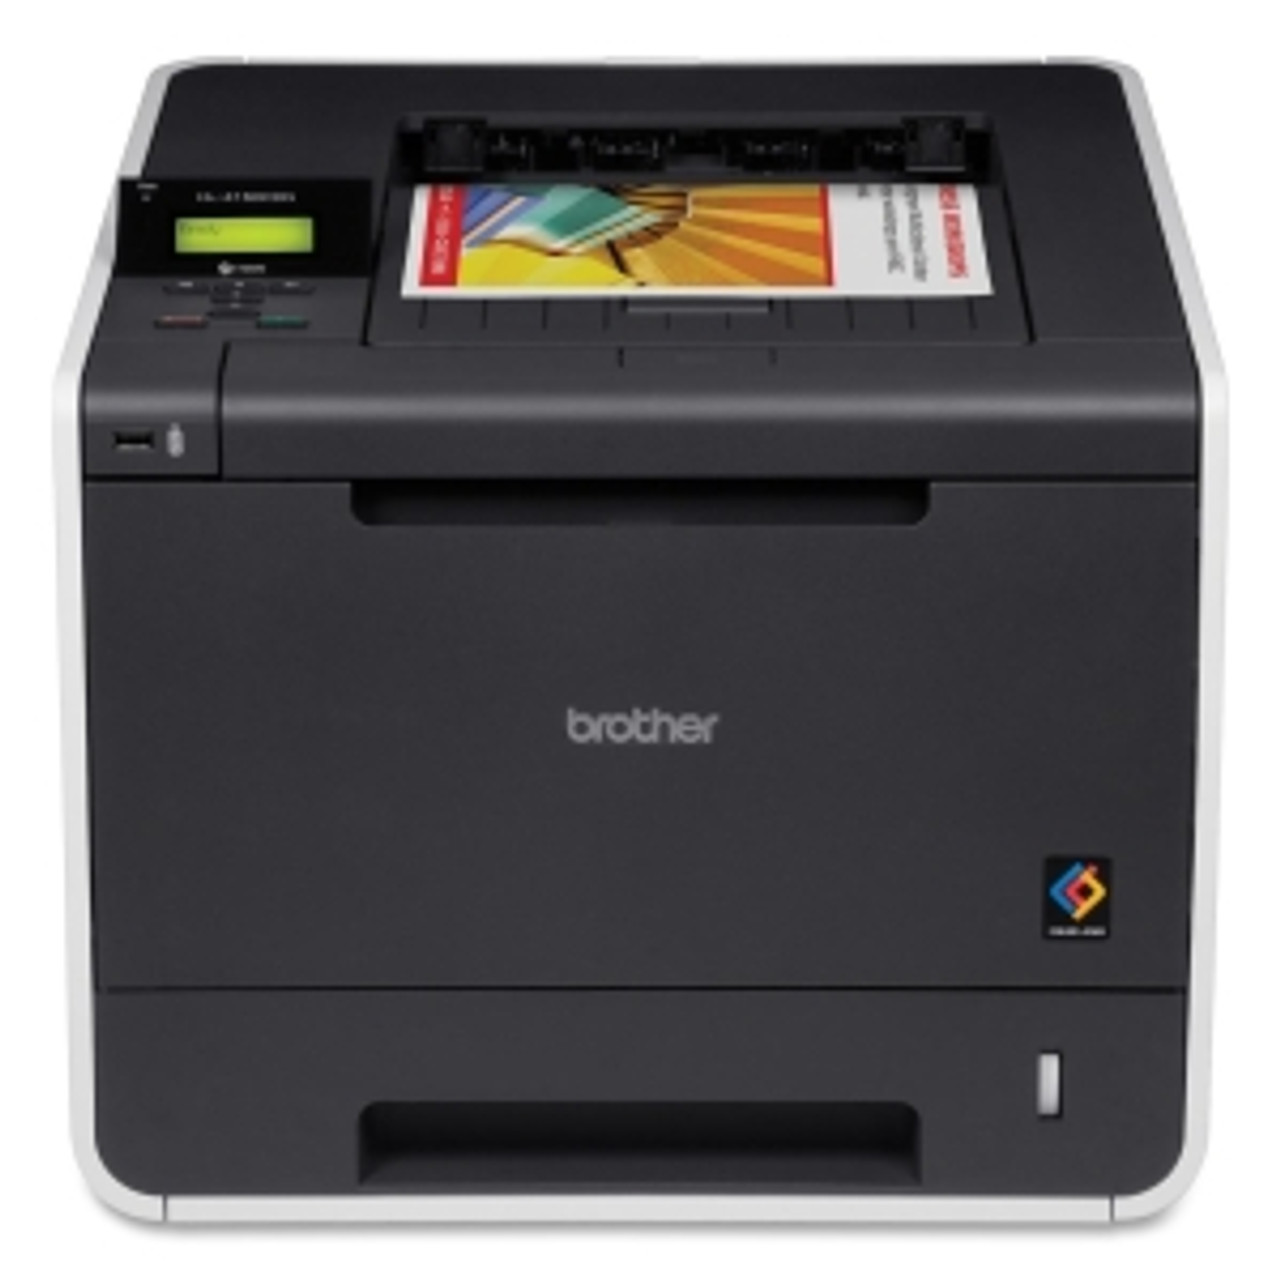 HL4150CDNZU1 - Brother HL-4150CDN Laser Printer Color 2400 x 600 dpi Print Plain Paper Print Desktop 25 ppm Mono / 24 ppm Color Print 300 sheets Input Auto